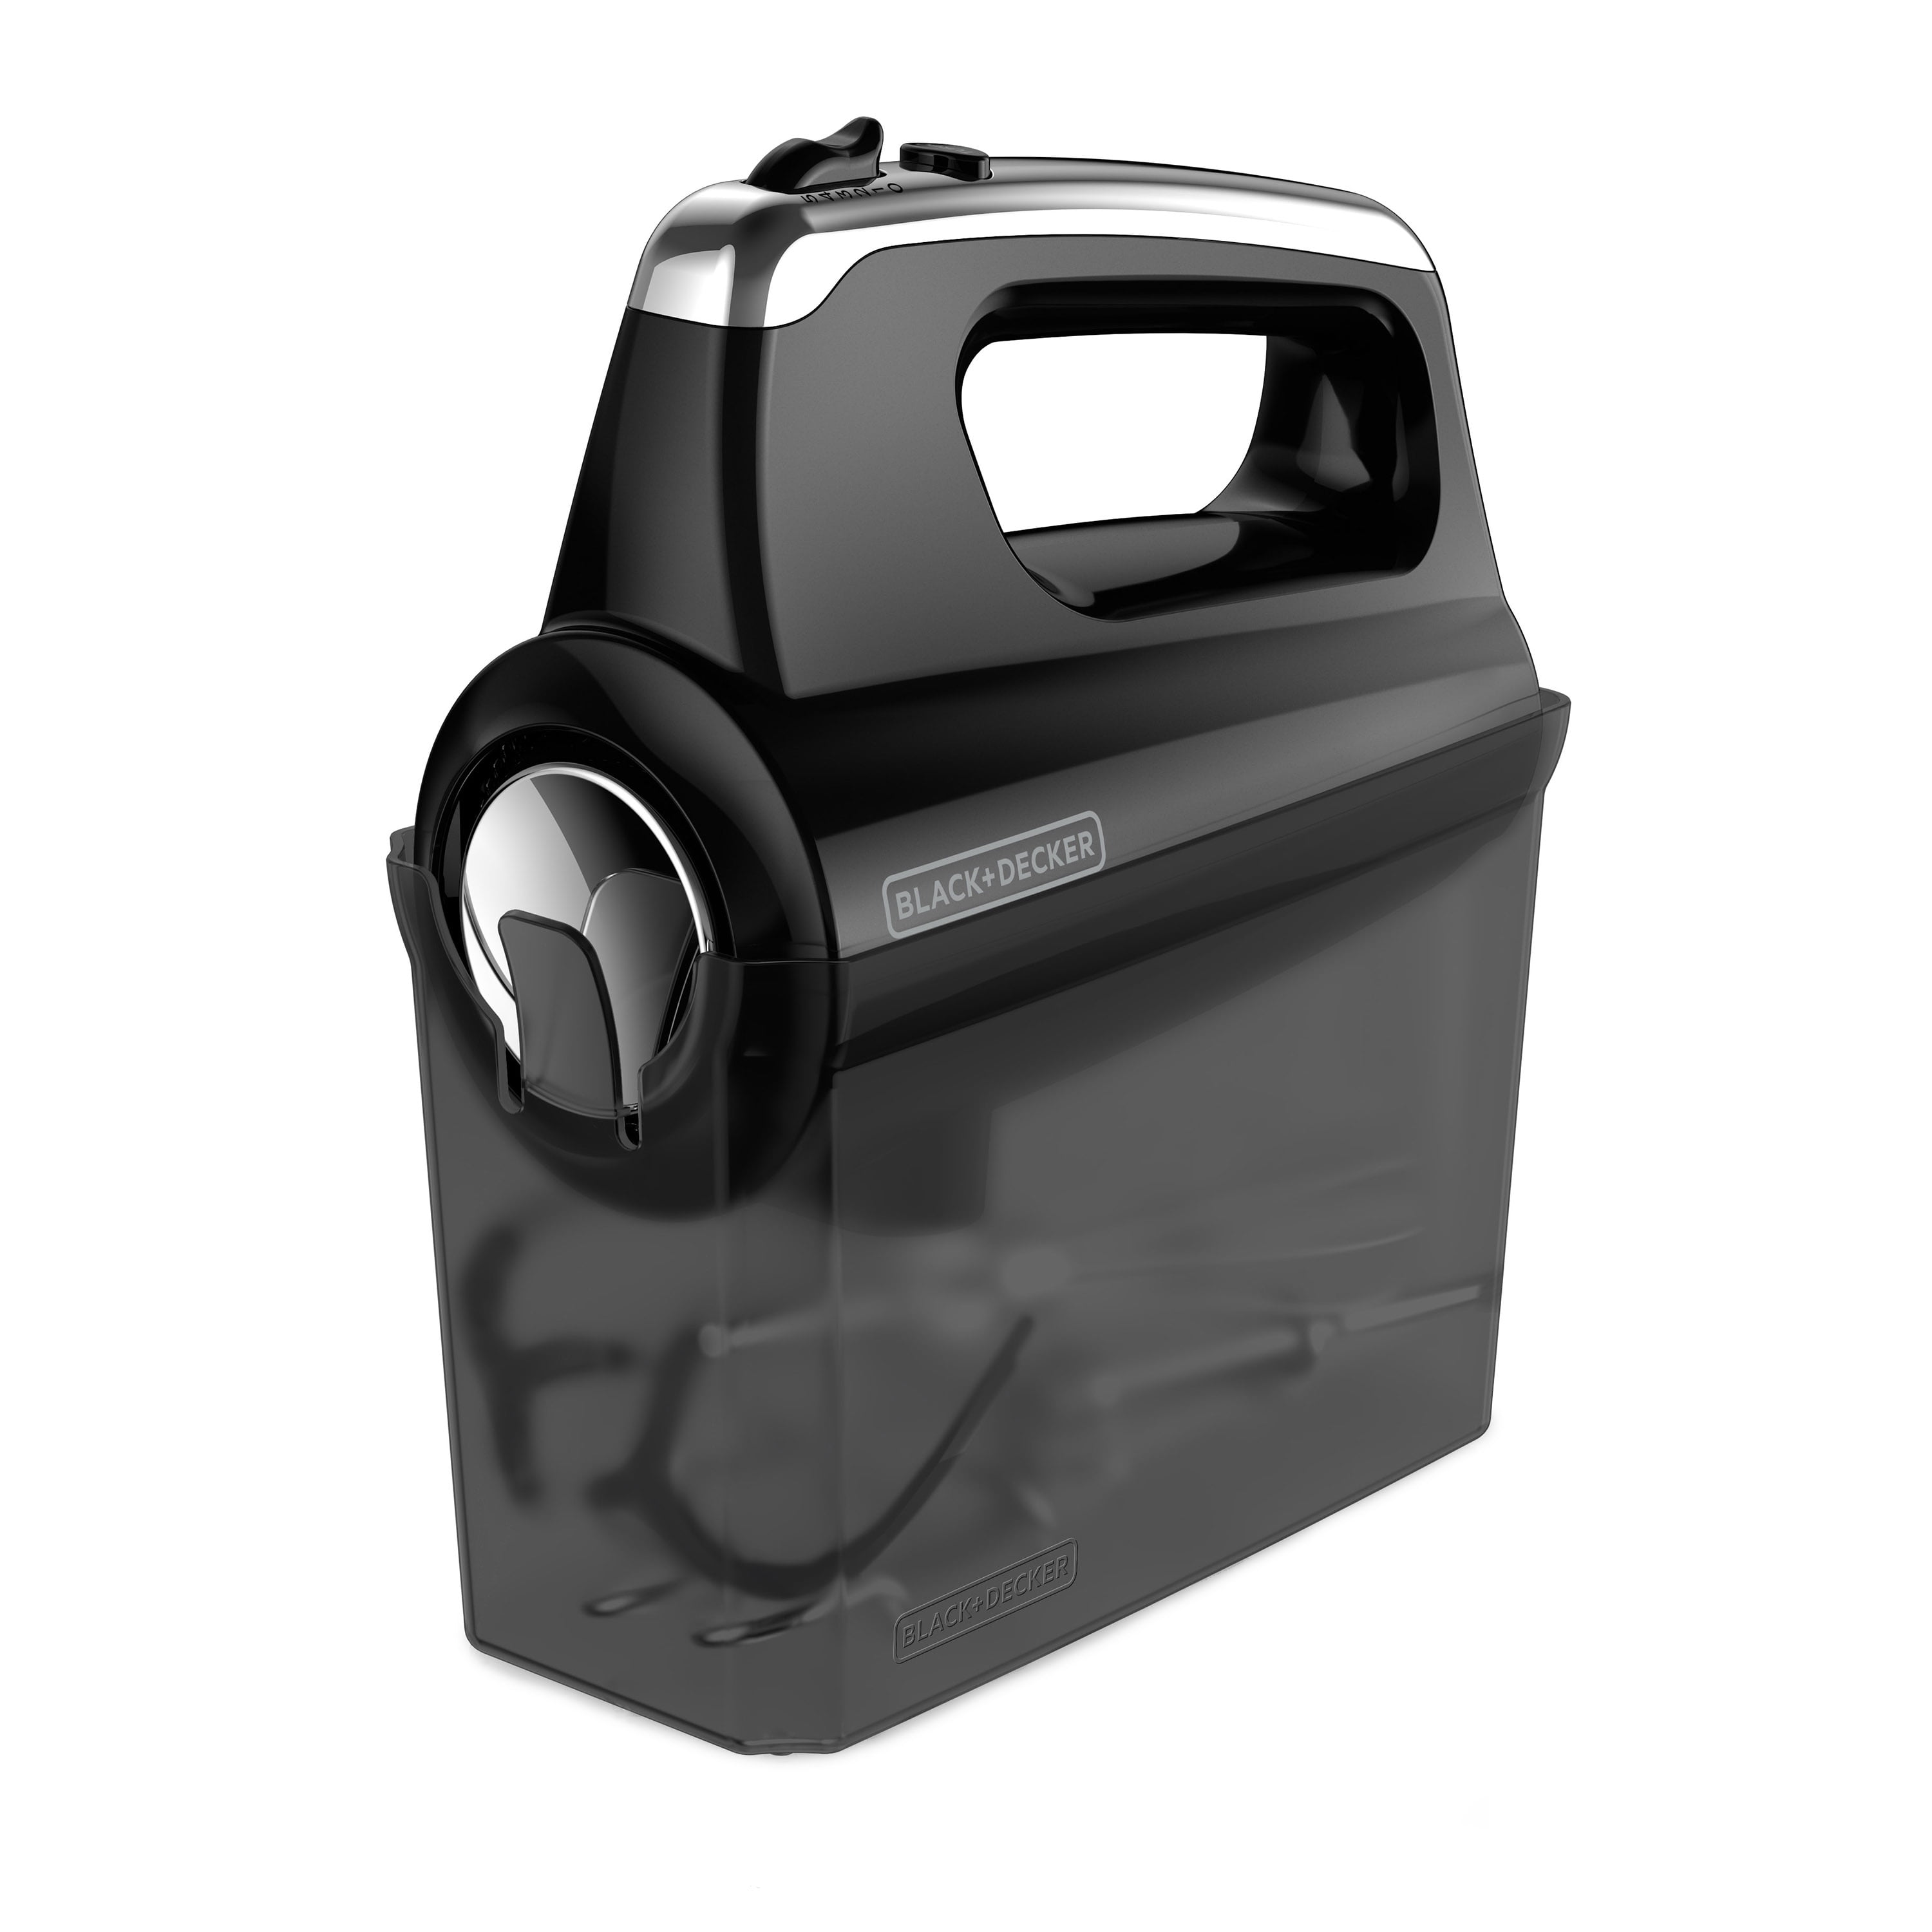 BLACK+DECKER Helix Performance Premium 5-Speed Hand Mixer, Black